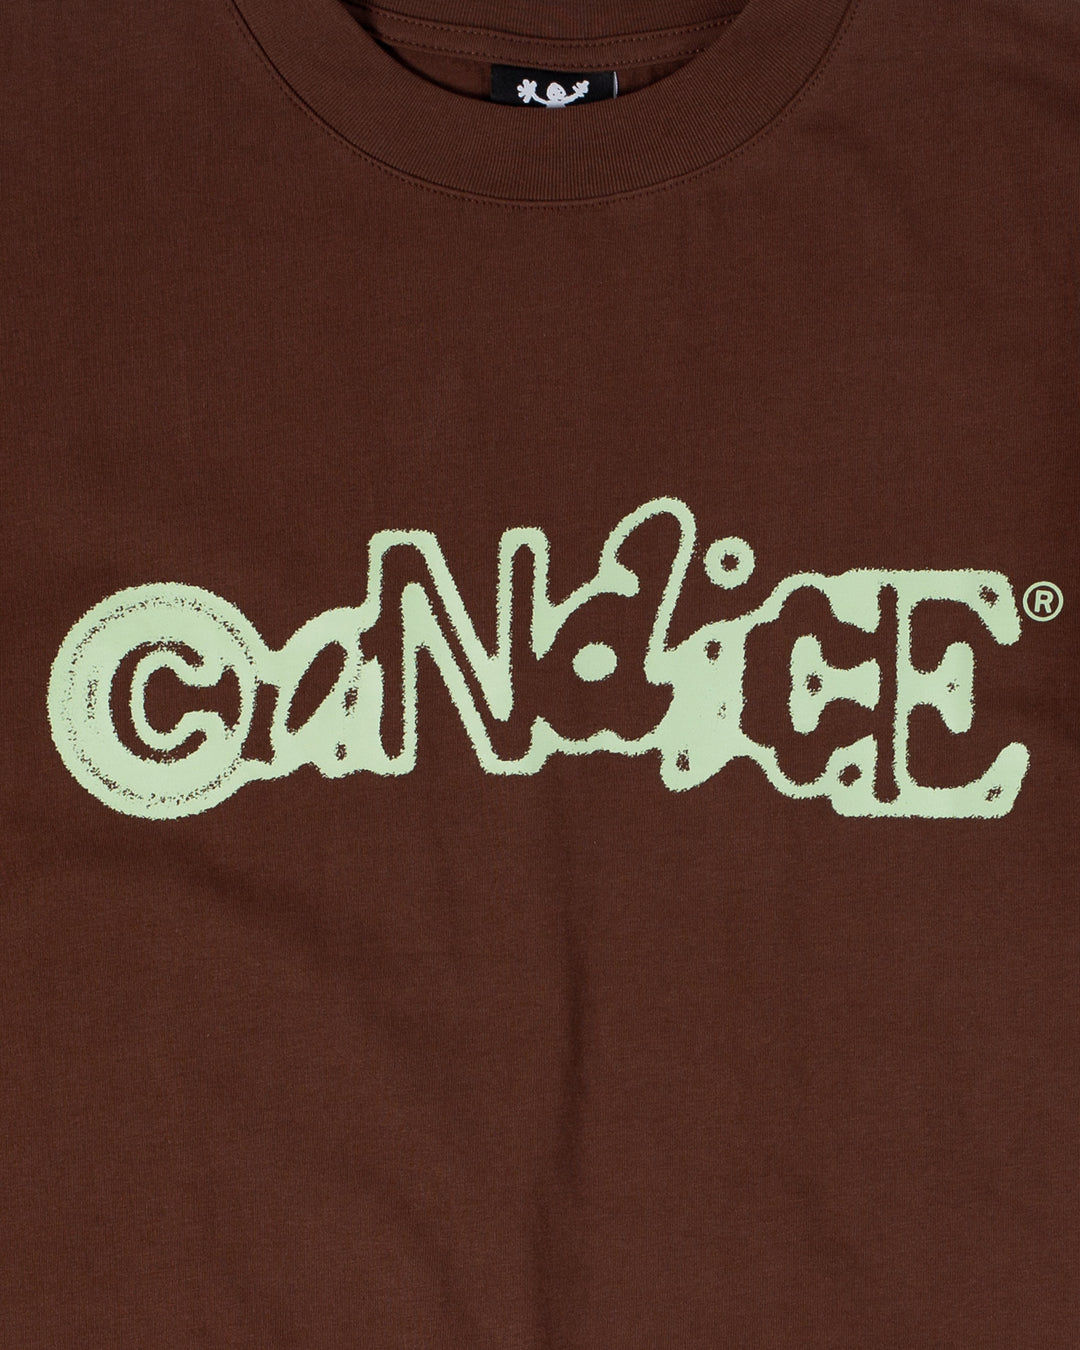 Candice - Indulge Tshirt - Brown